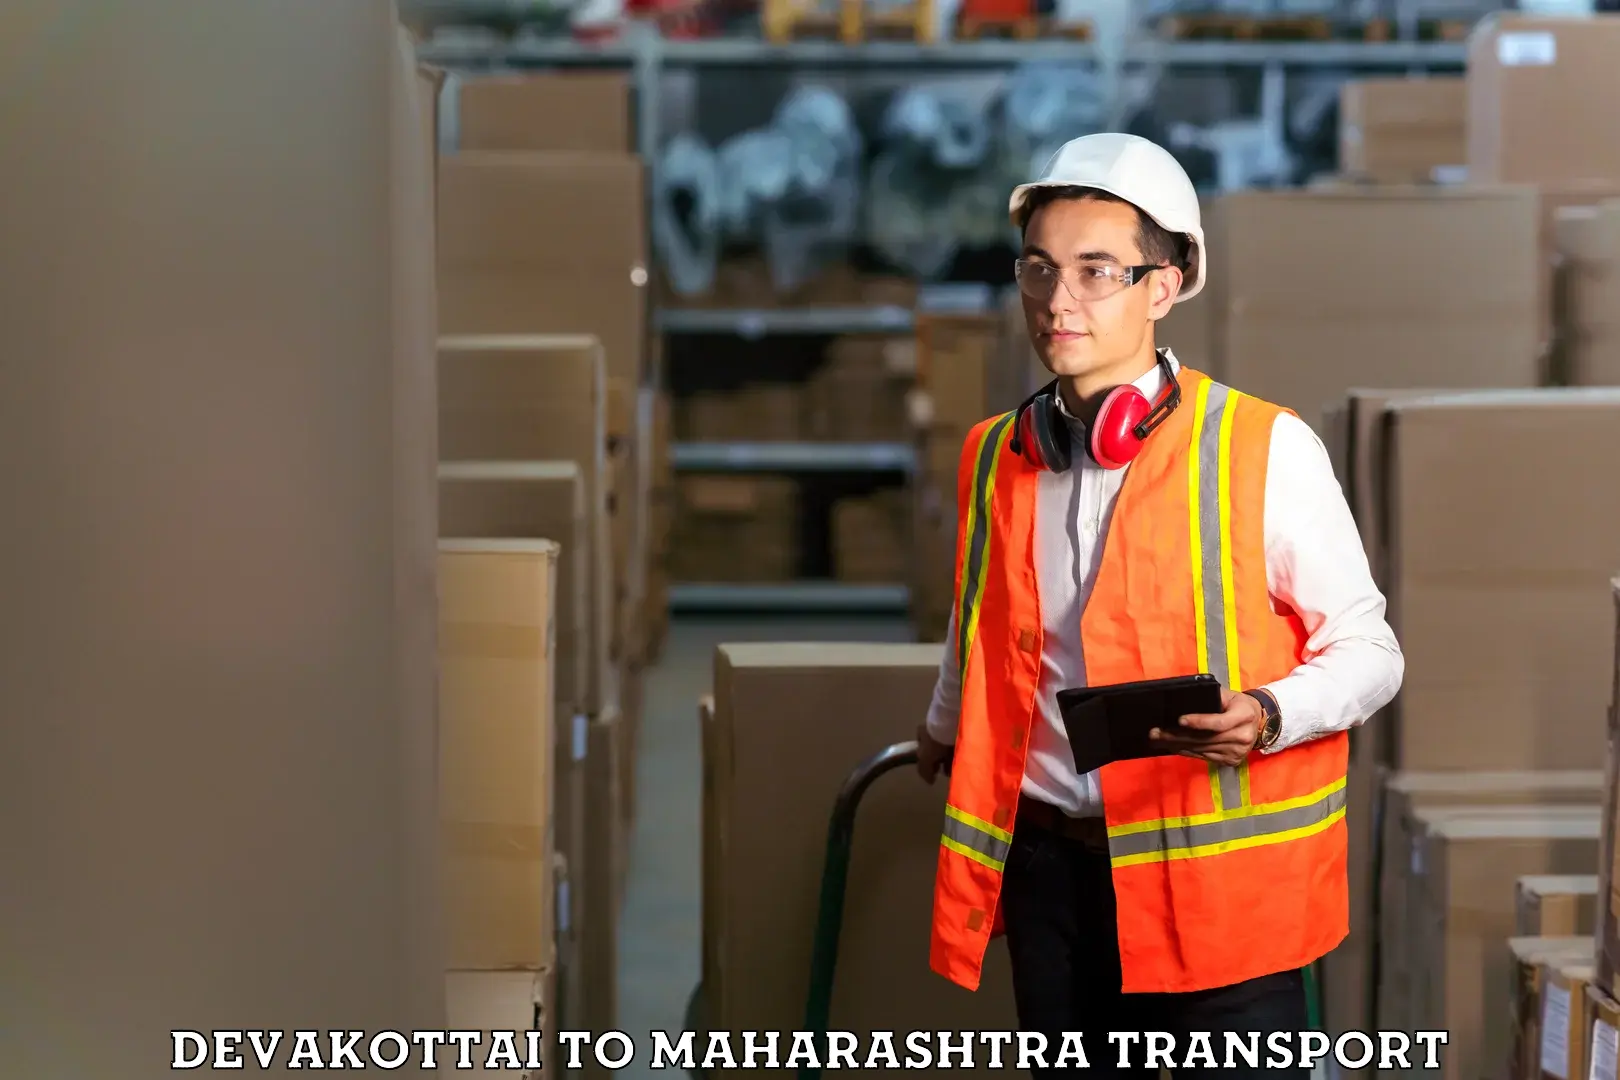 Shipping partner Devakottai to Maharashtra